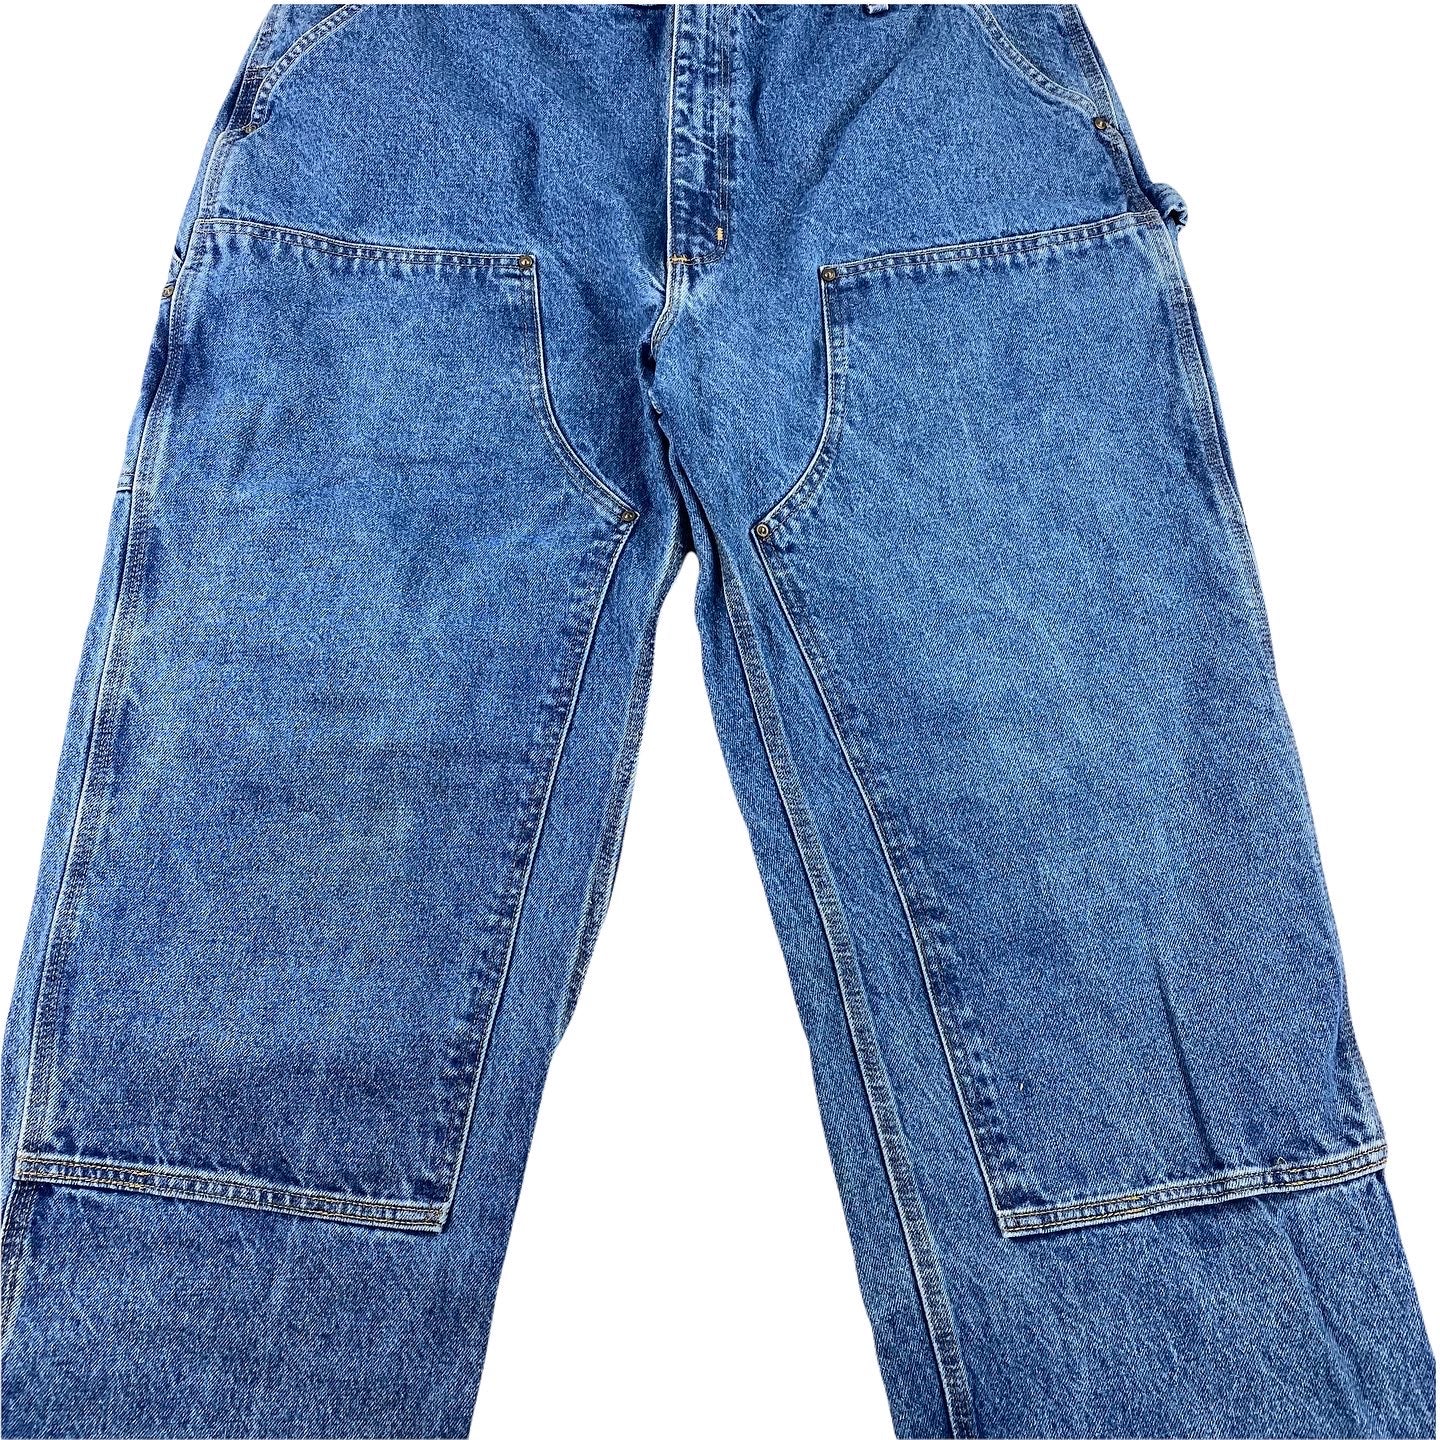 Carhartt double knee jeans. 42/32